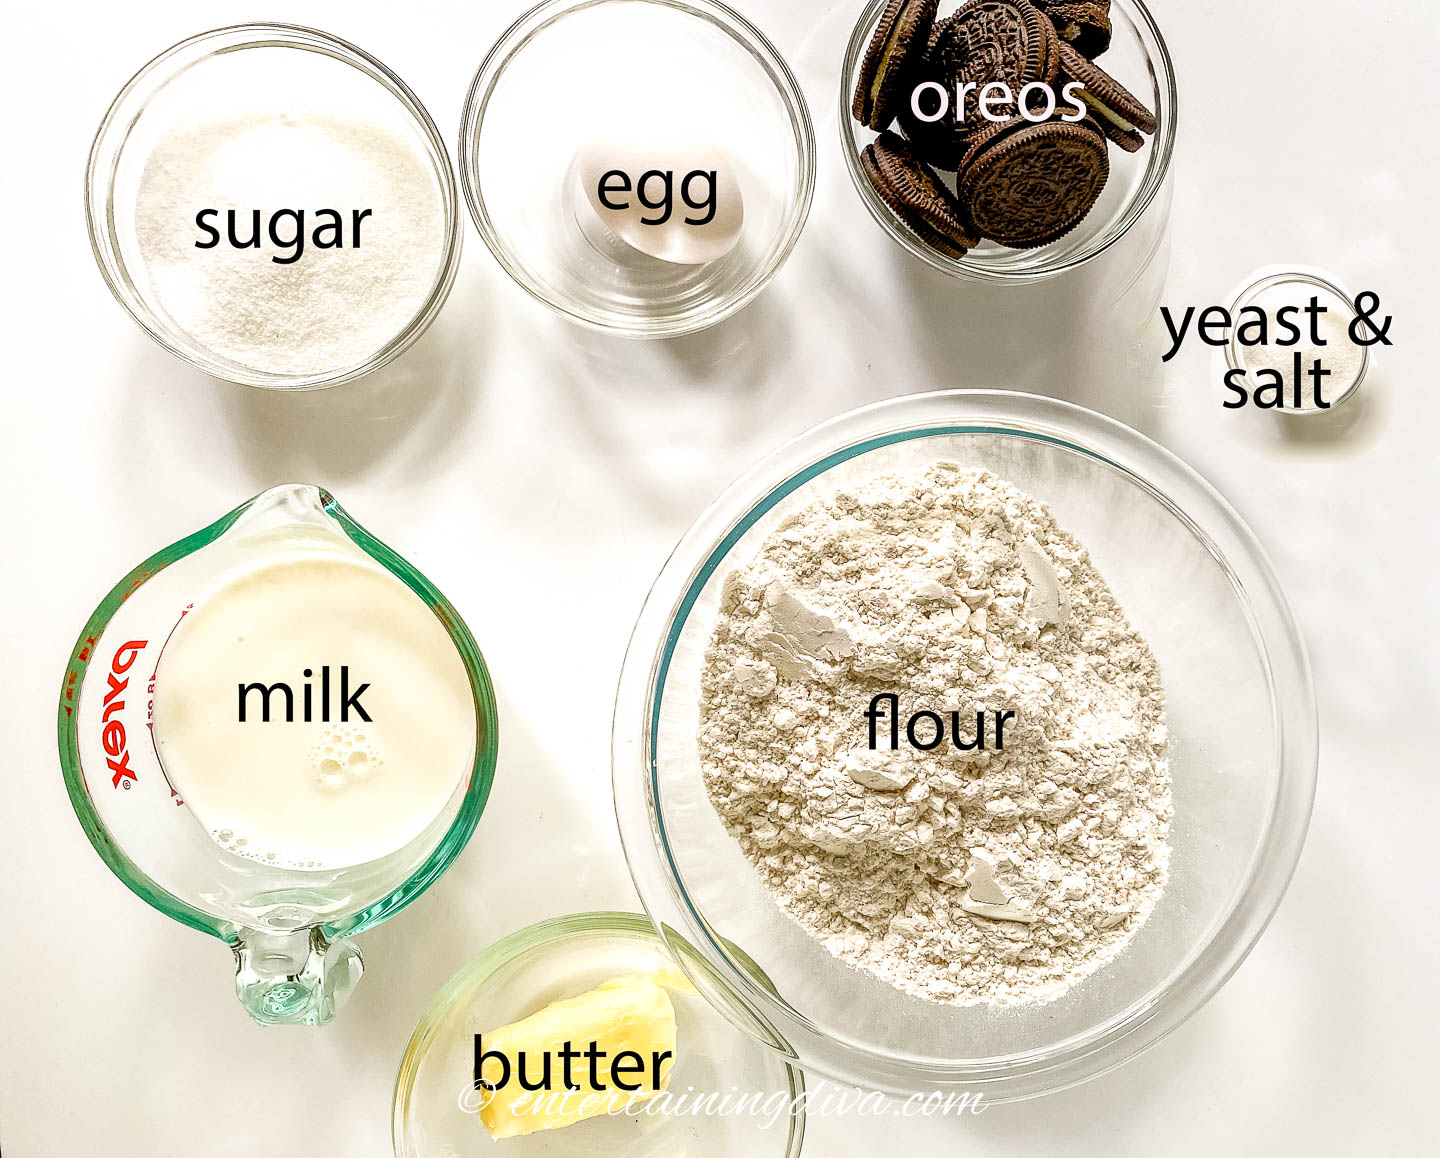 Oreo cinnamon roll dough ingredients - sugar, egg, Oreos, yeast, salt, milk, flour and butter